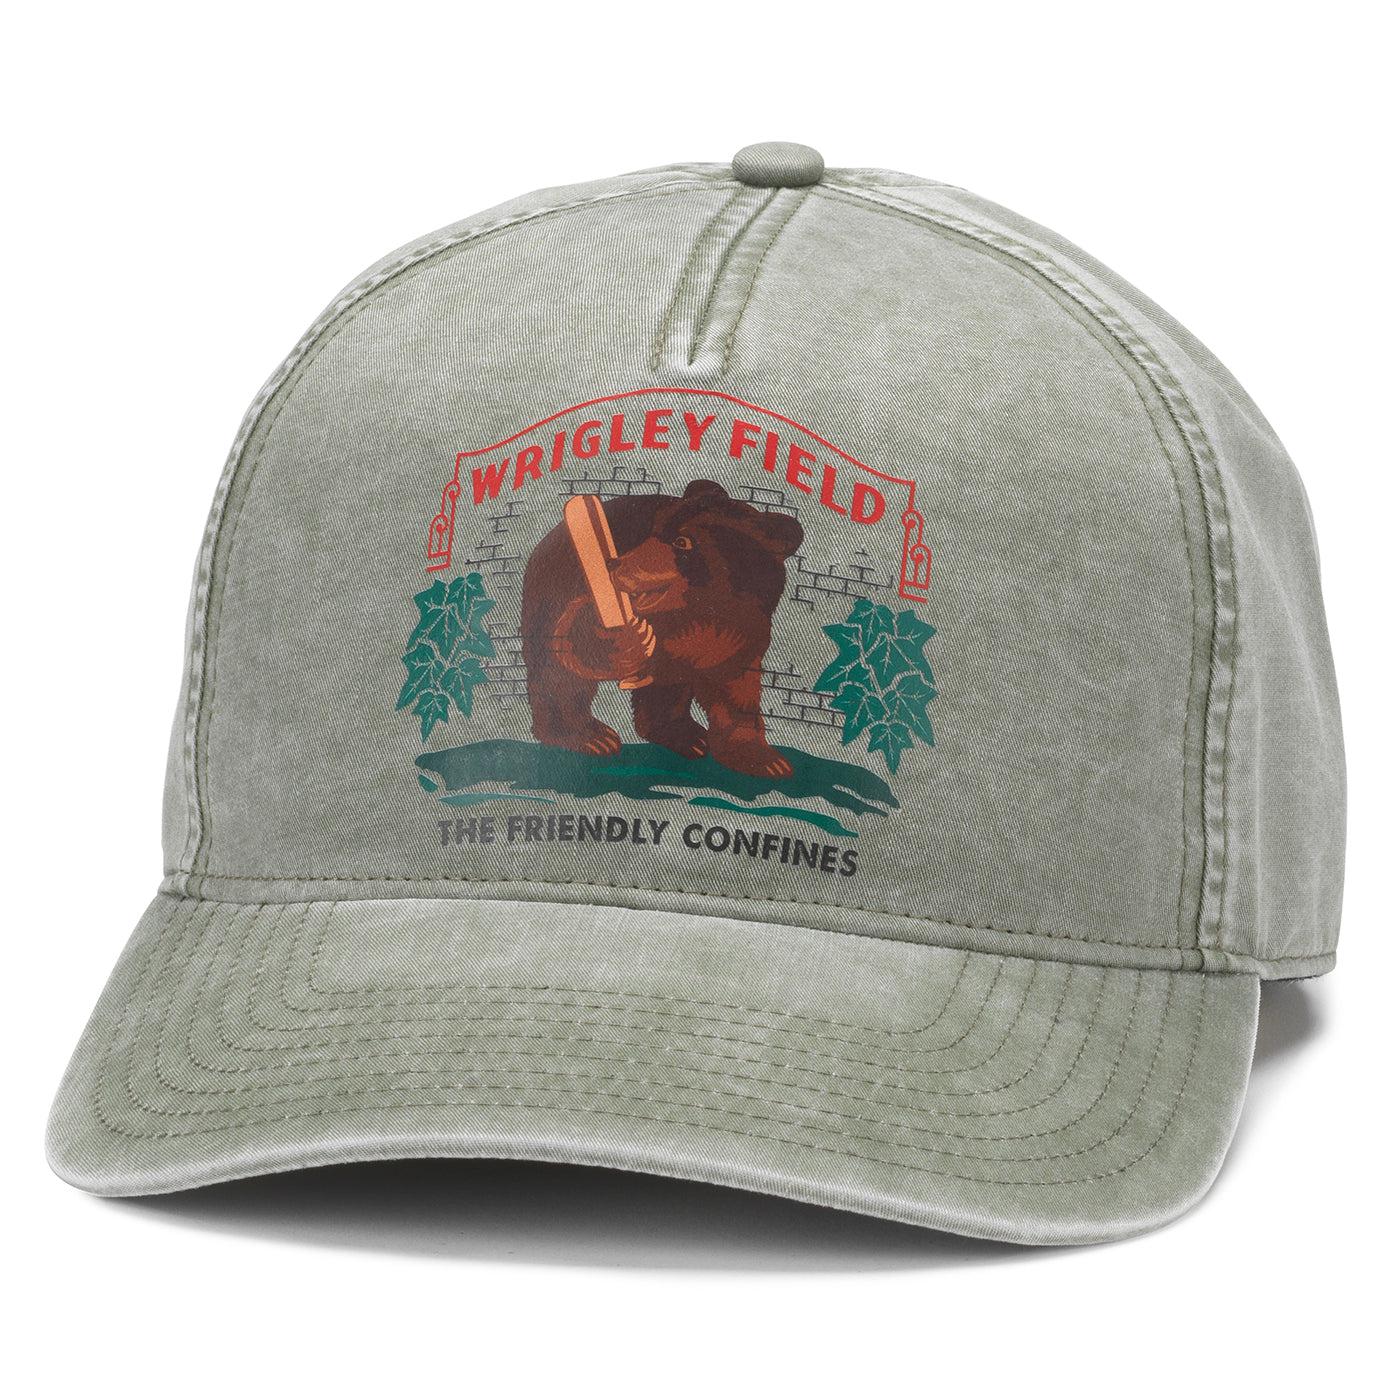 WRIGLEY FIELD AMERICAN NEEDLE TRAILHEAD CAP